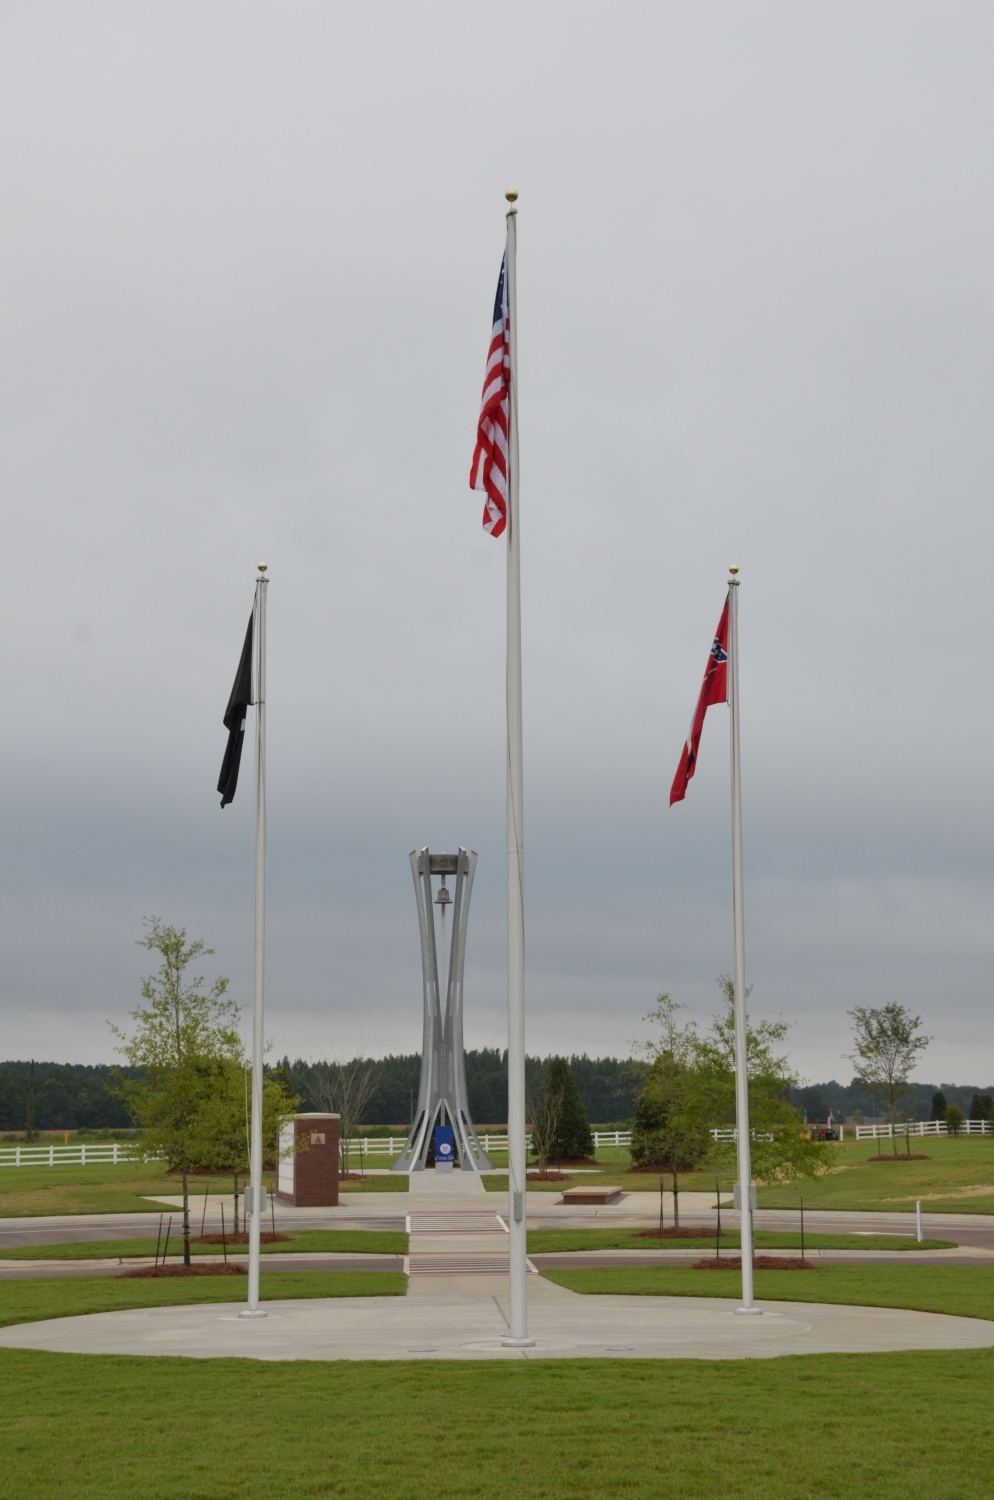 North Mississippi Veterans Memorial Liberty Carillon